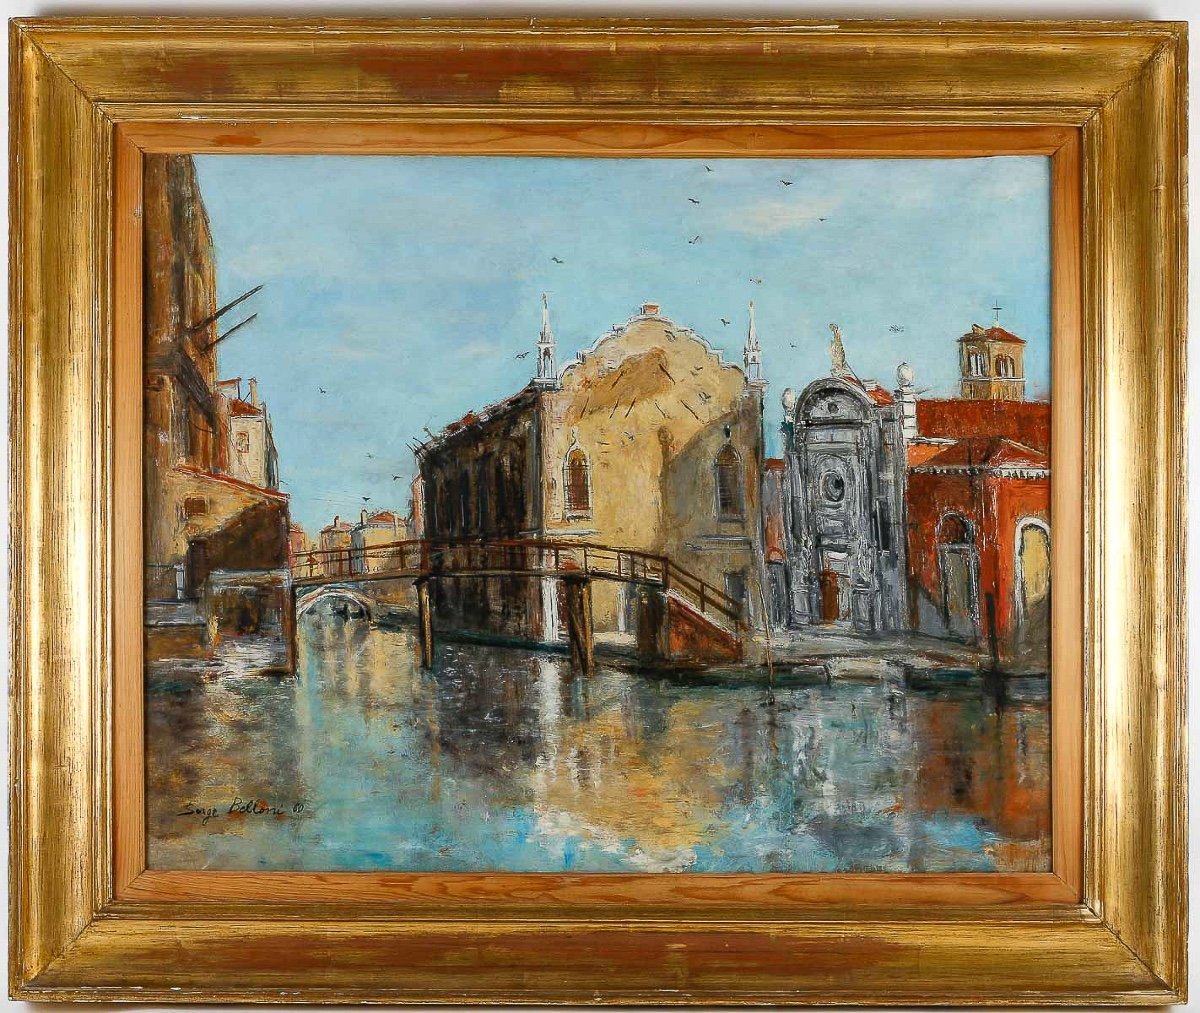 Serge Belloni Le Peintre De Paris (1925-2005) - A Promenade In Venice Oil On Canvas Circa 1960